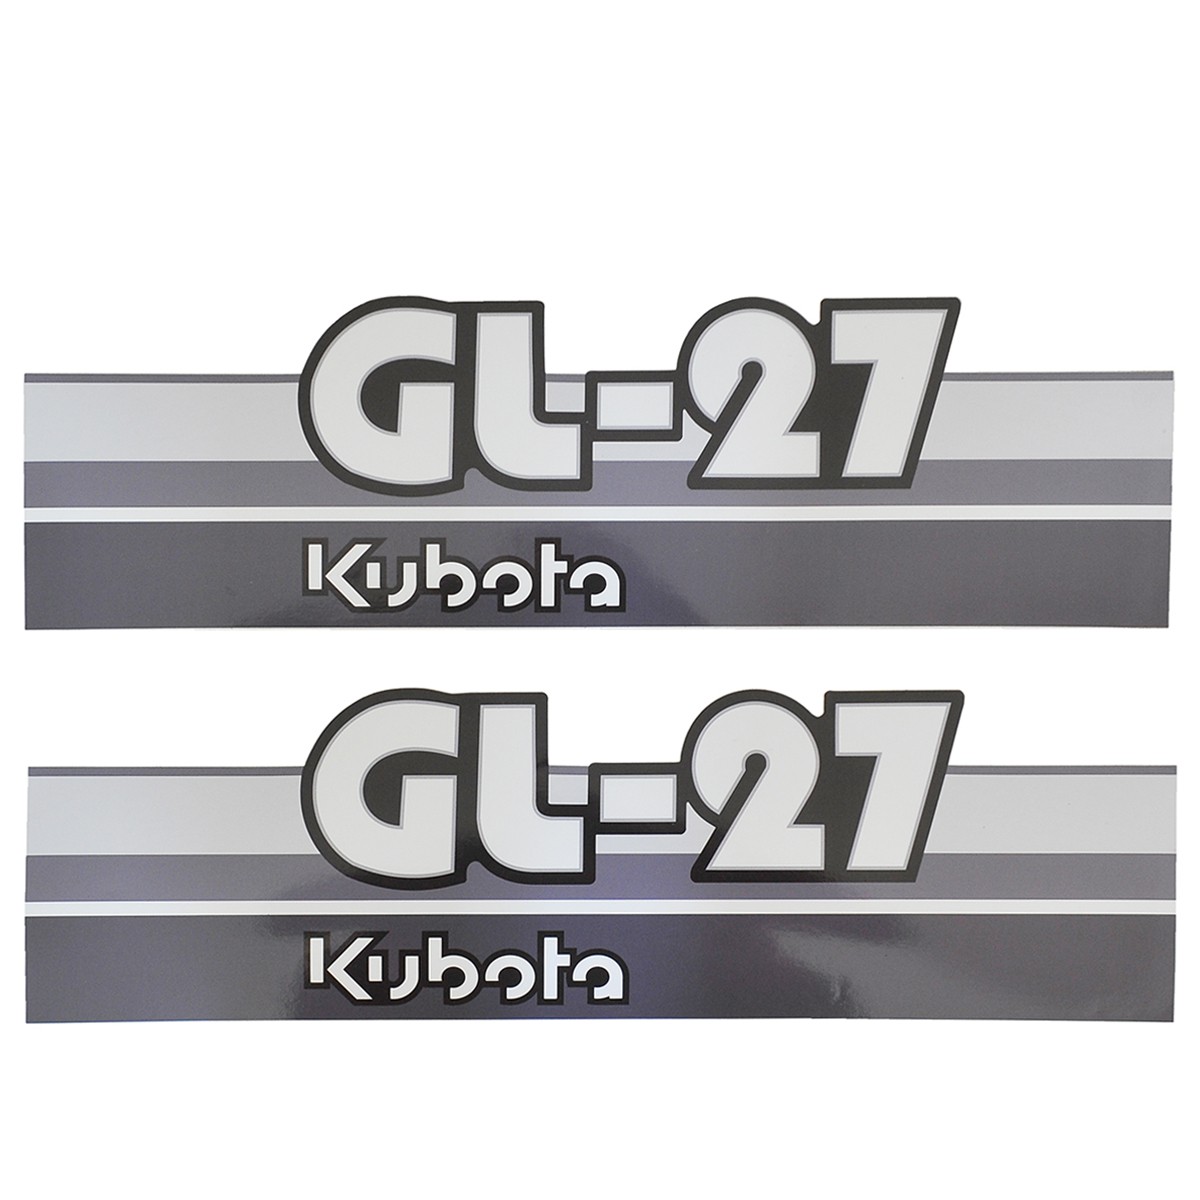 Naklejki Kubota GL27